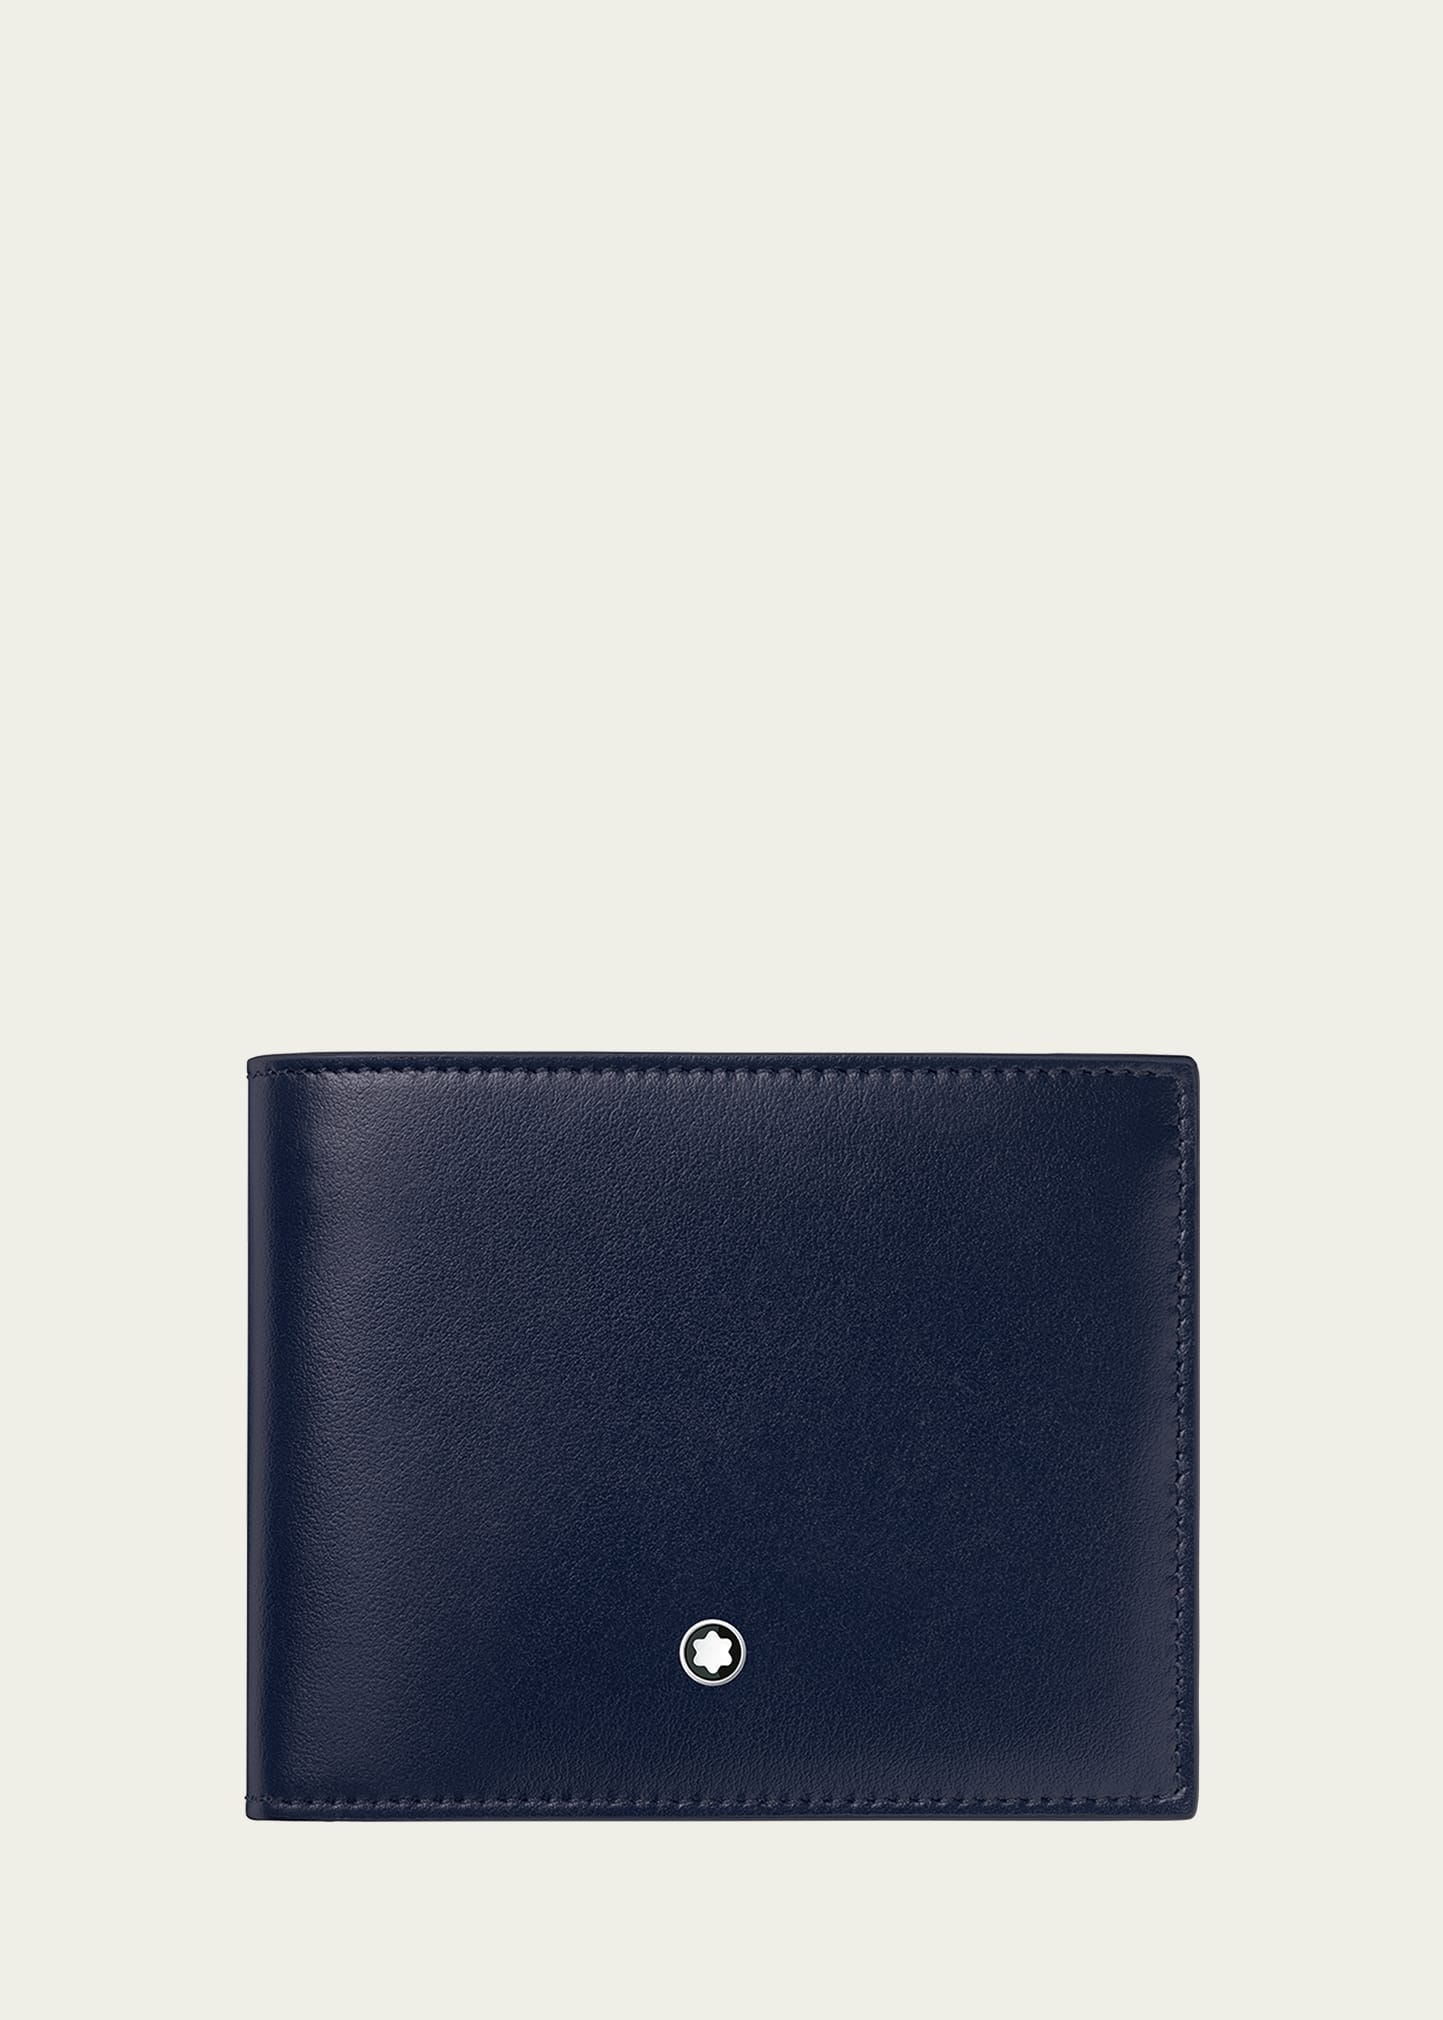 Men's Meisterstuck Leather Bifold Wallet